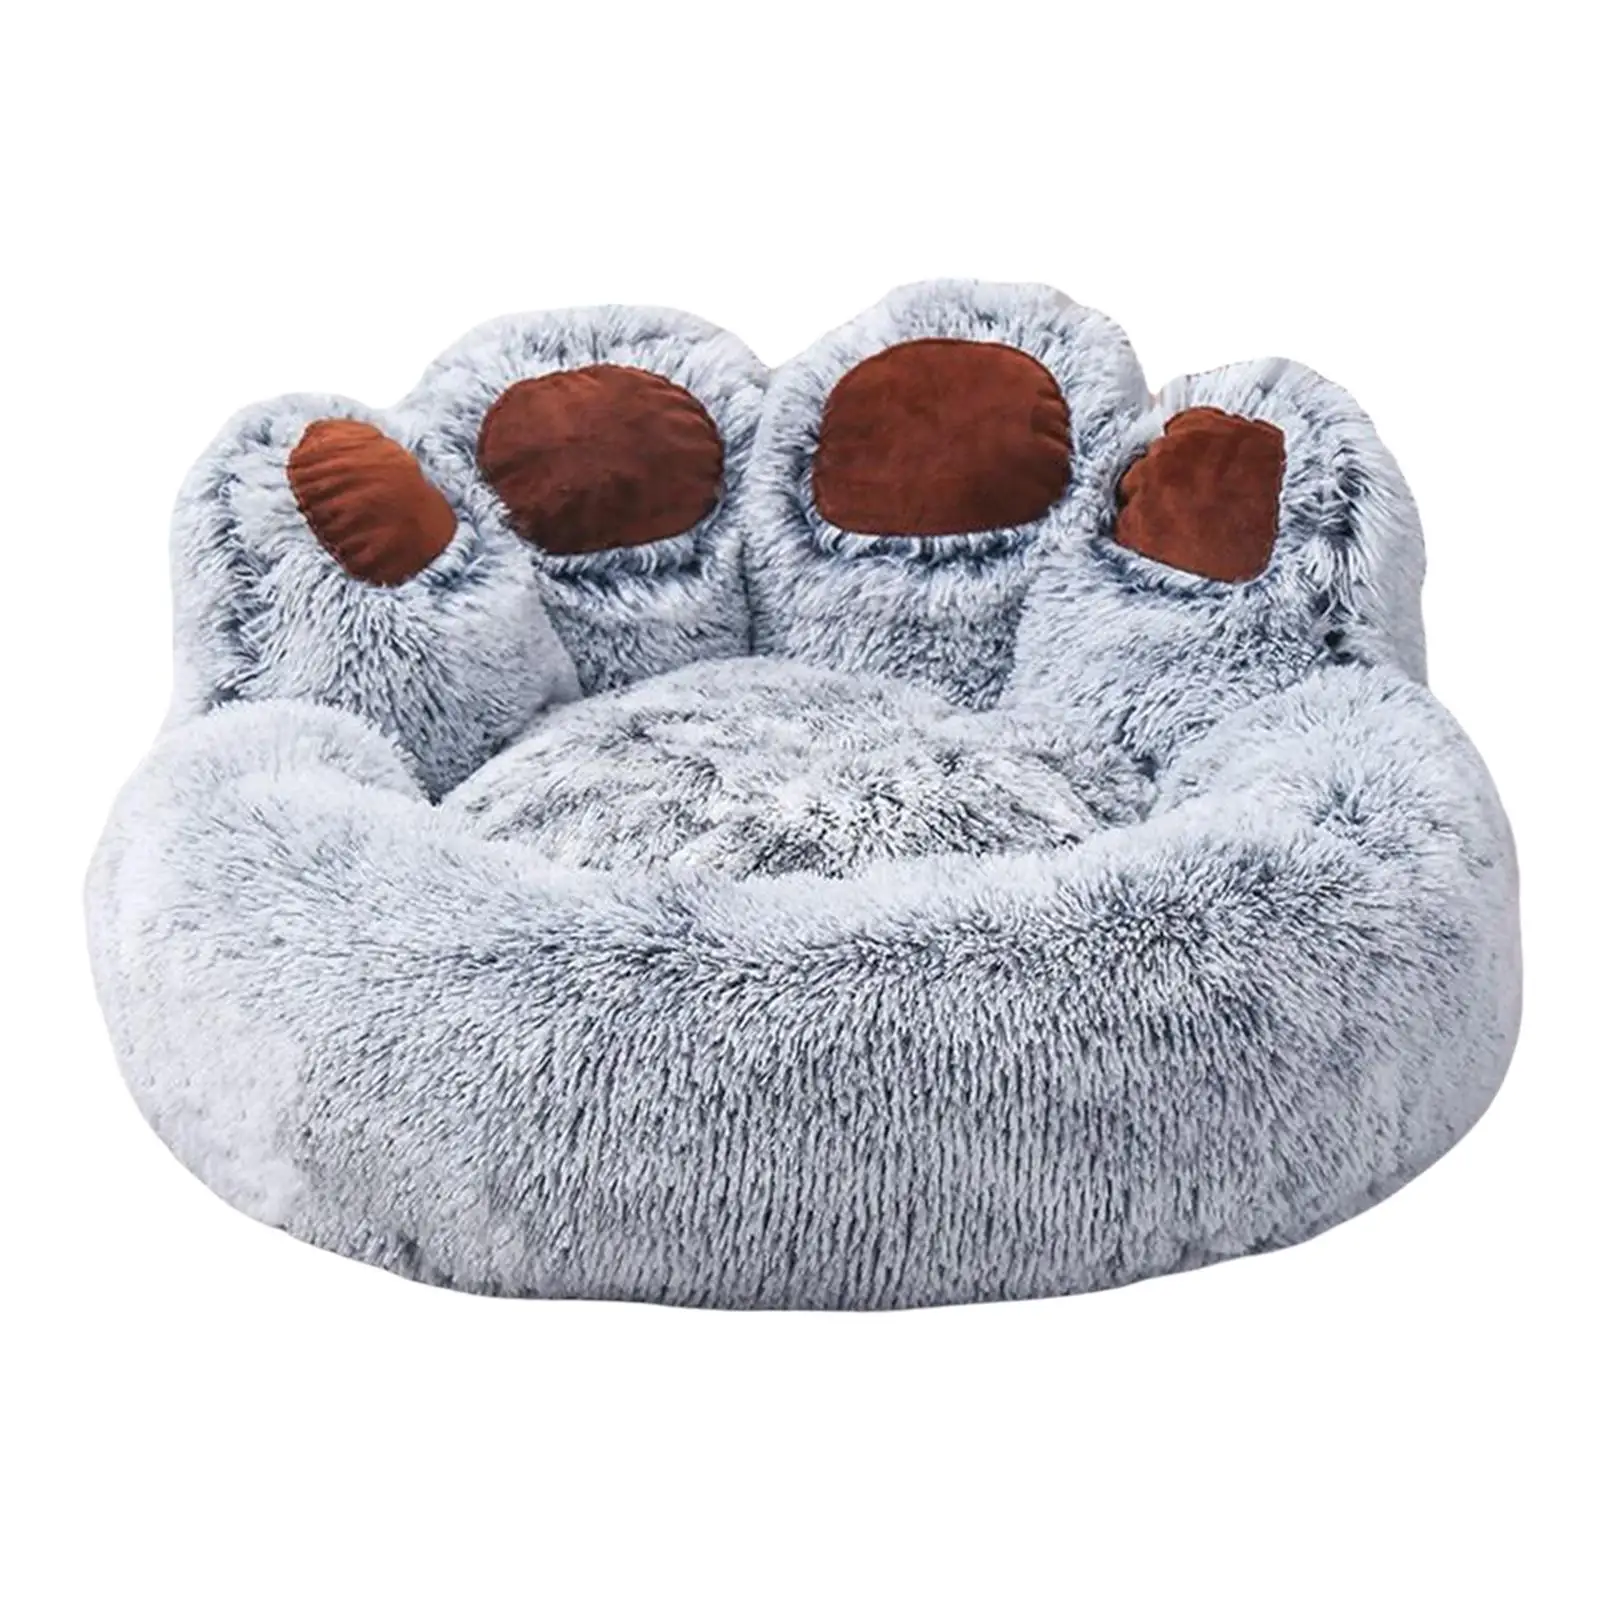 Plush Cat Warm House Dog Bed Small Medium Dog Nest Kitten Pet Puppy Blanket